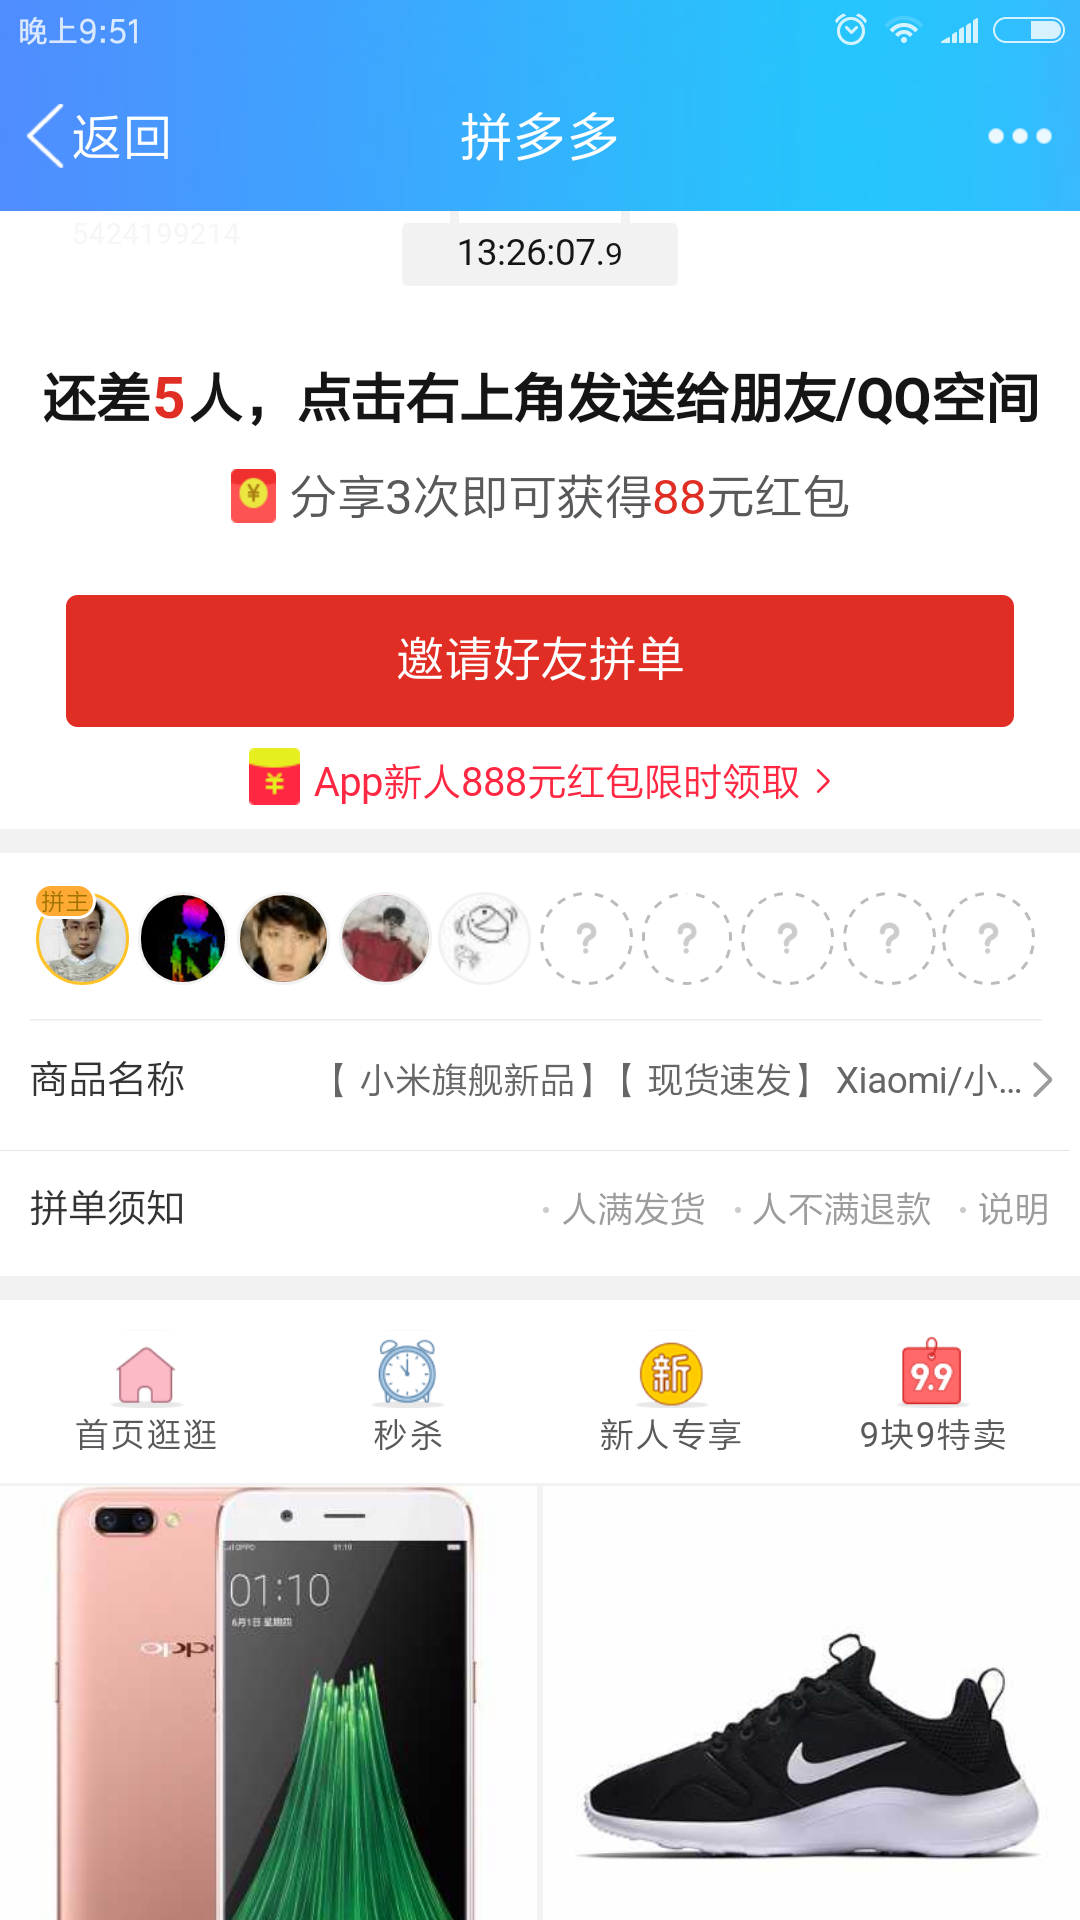 Screenshot_2017-10-14-21-51-40-198_com.tencent.mobileqq.png